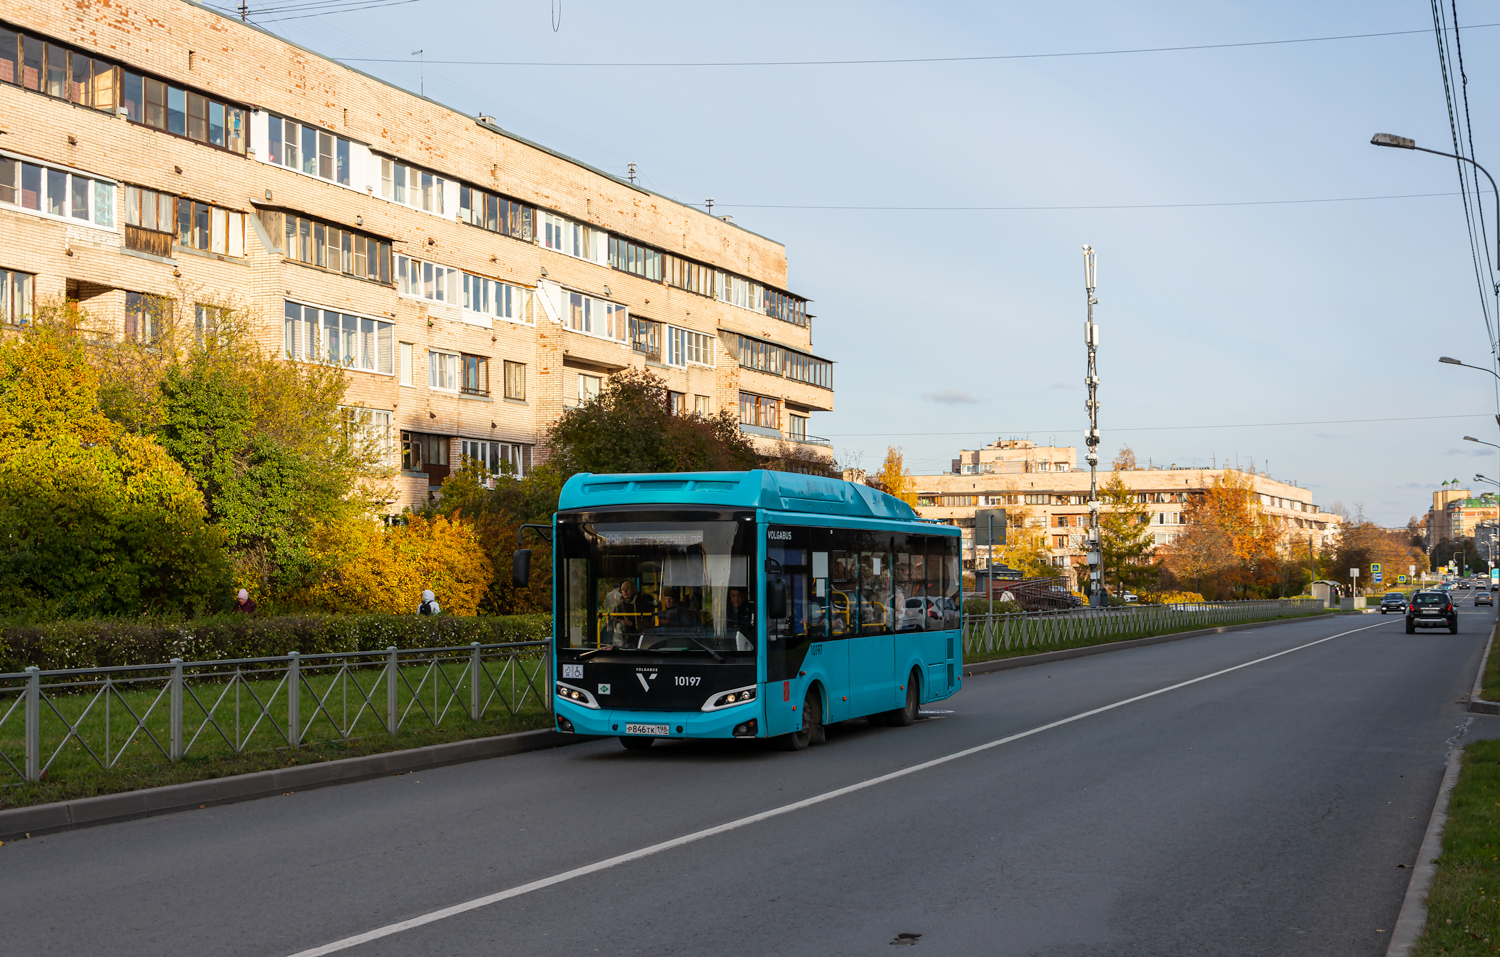 Saint Petersburg, Volgabus-4298.G4 (CNG) # 10197